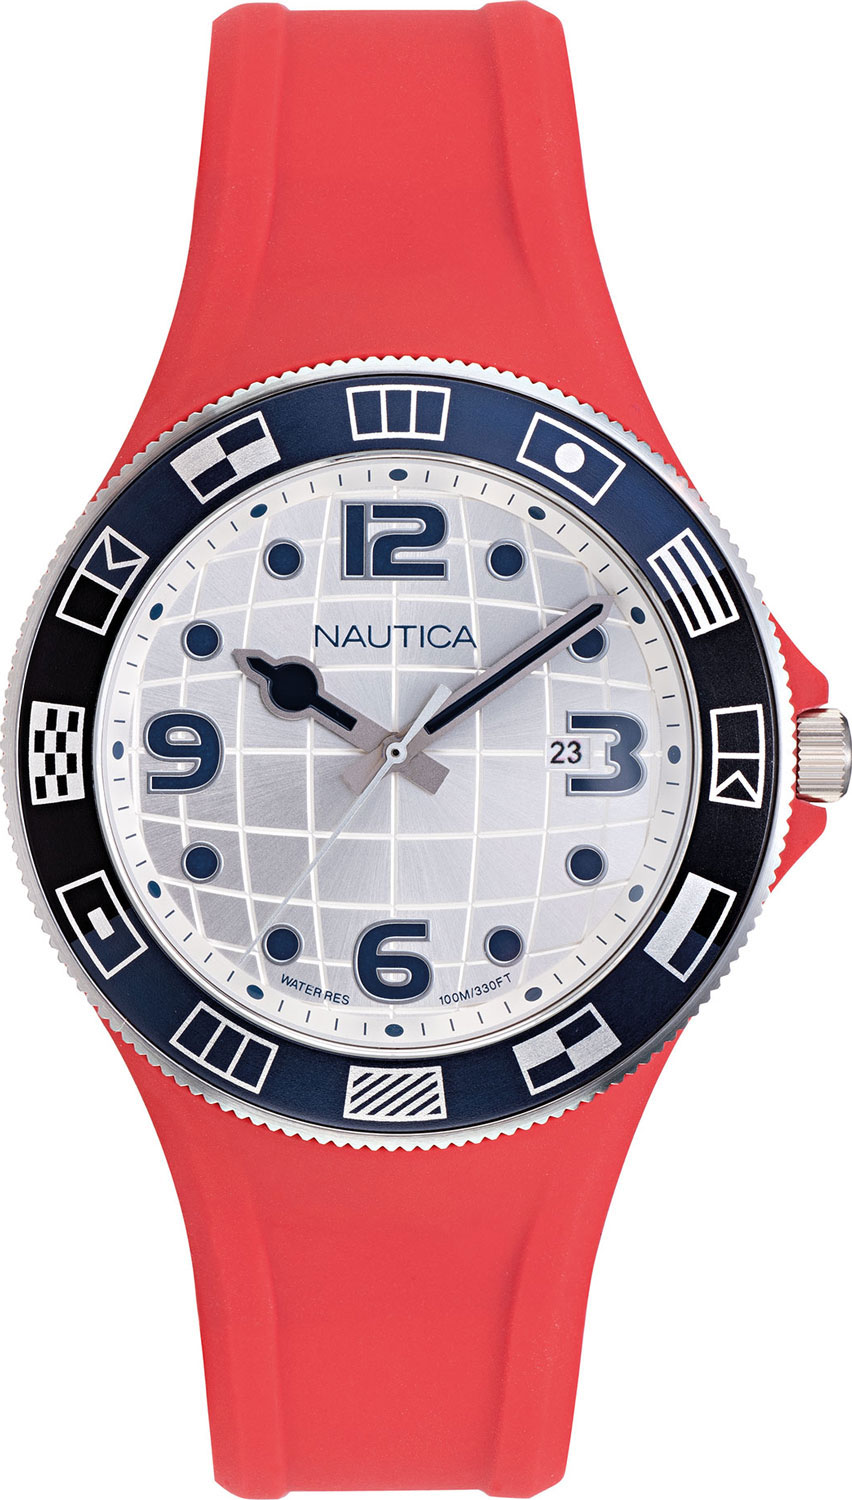   Nautica NAPLBS902